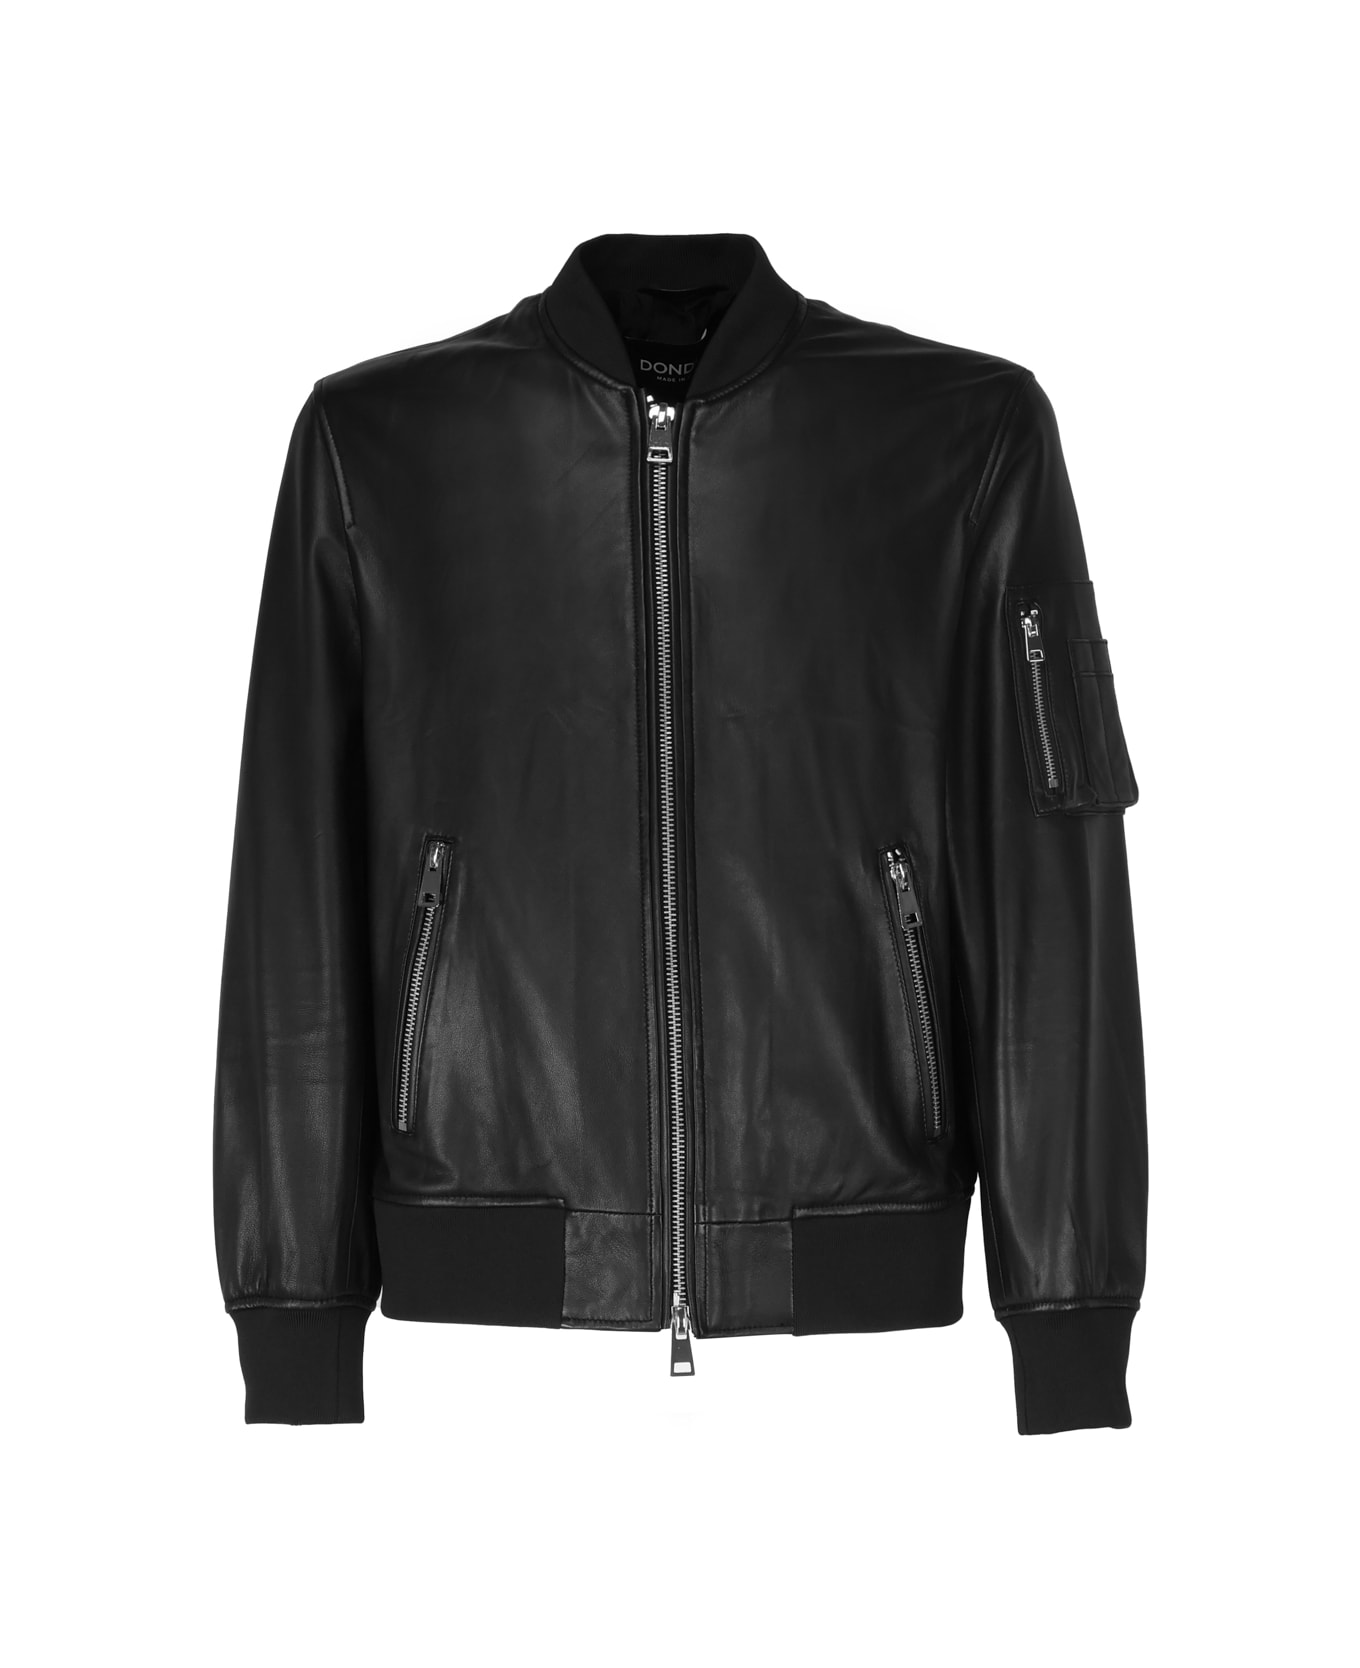 Dondup Leather Jacket With Zip - nero ダウンジャケット